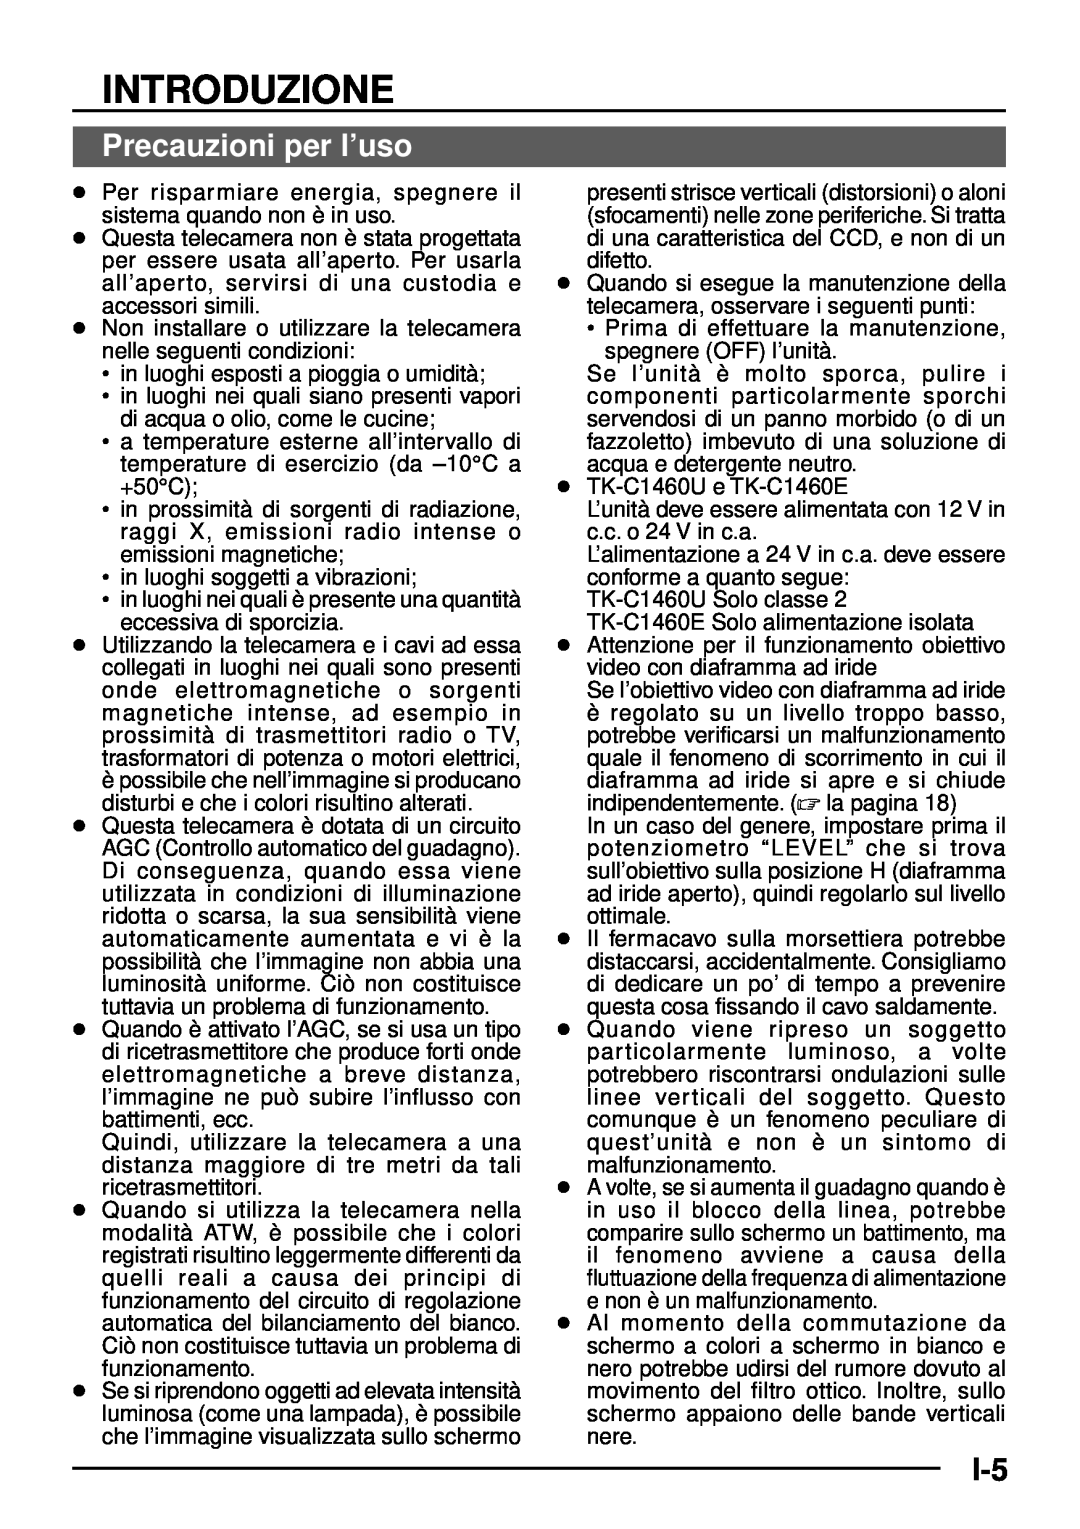 JVC TK-C1460 manual Introduzione, Precauzioni per l’uso 